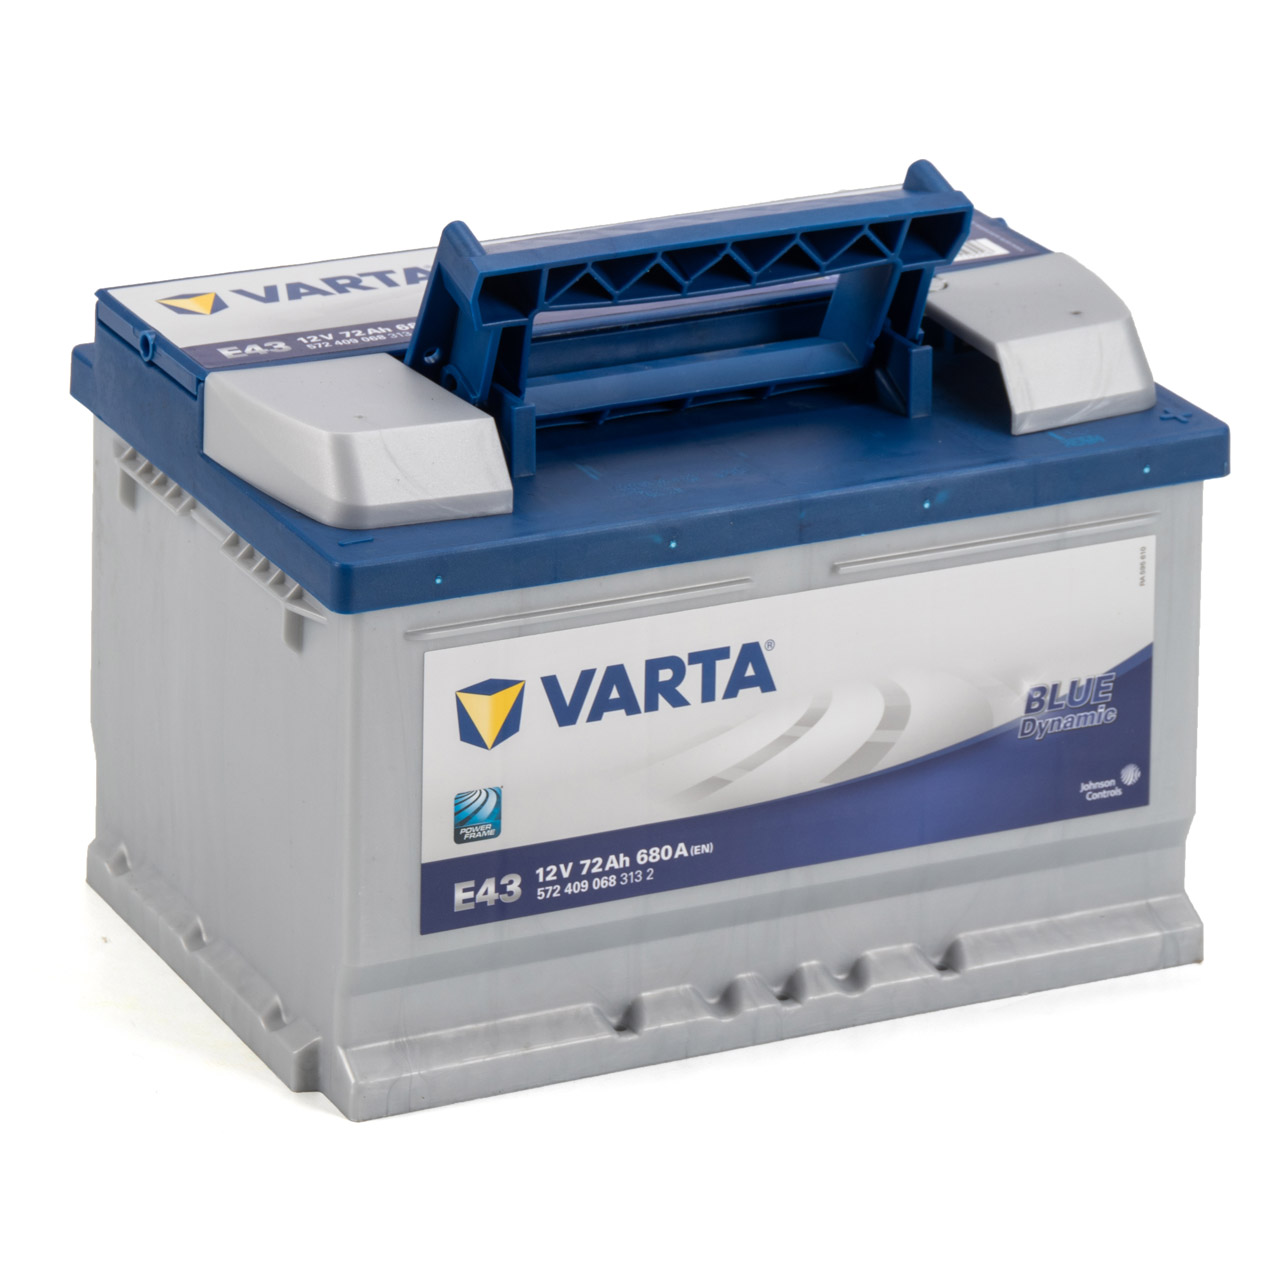 Varta Blue Dynamic E43 Autobatterie 12V 72Ah 680A in Niedersachsen